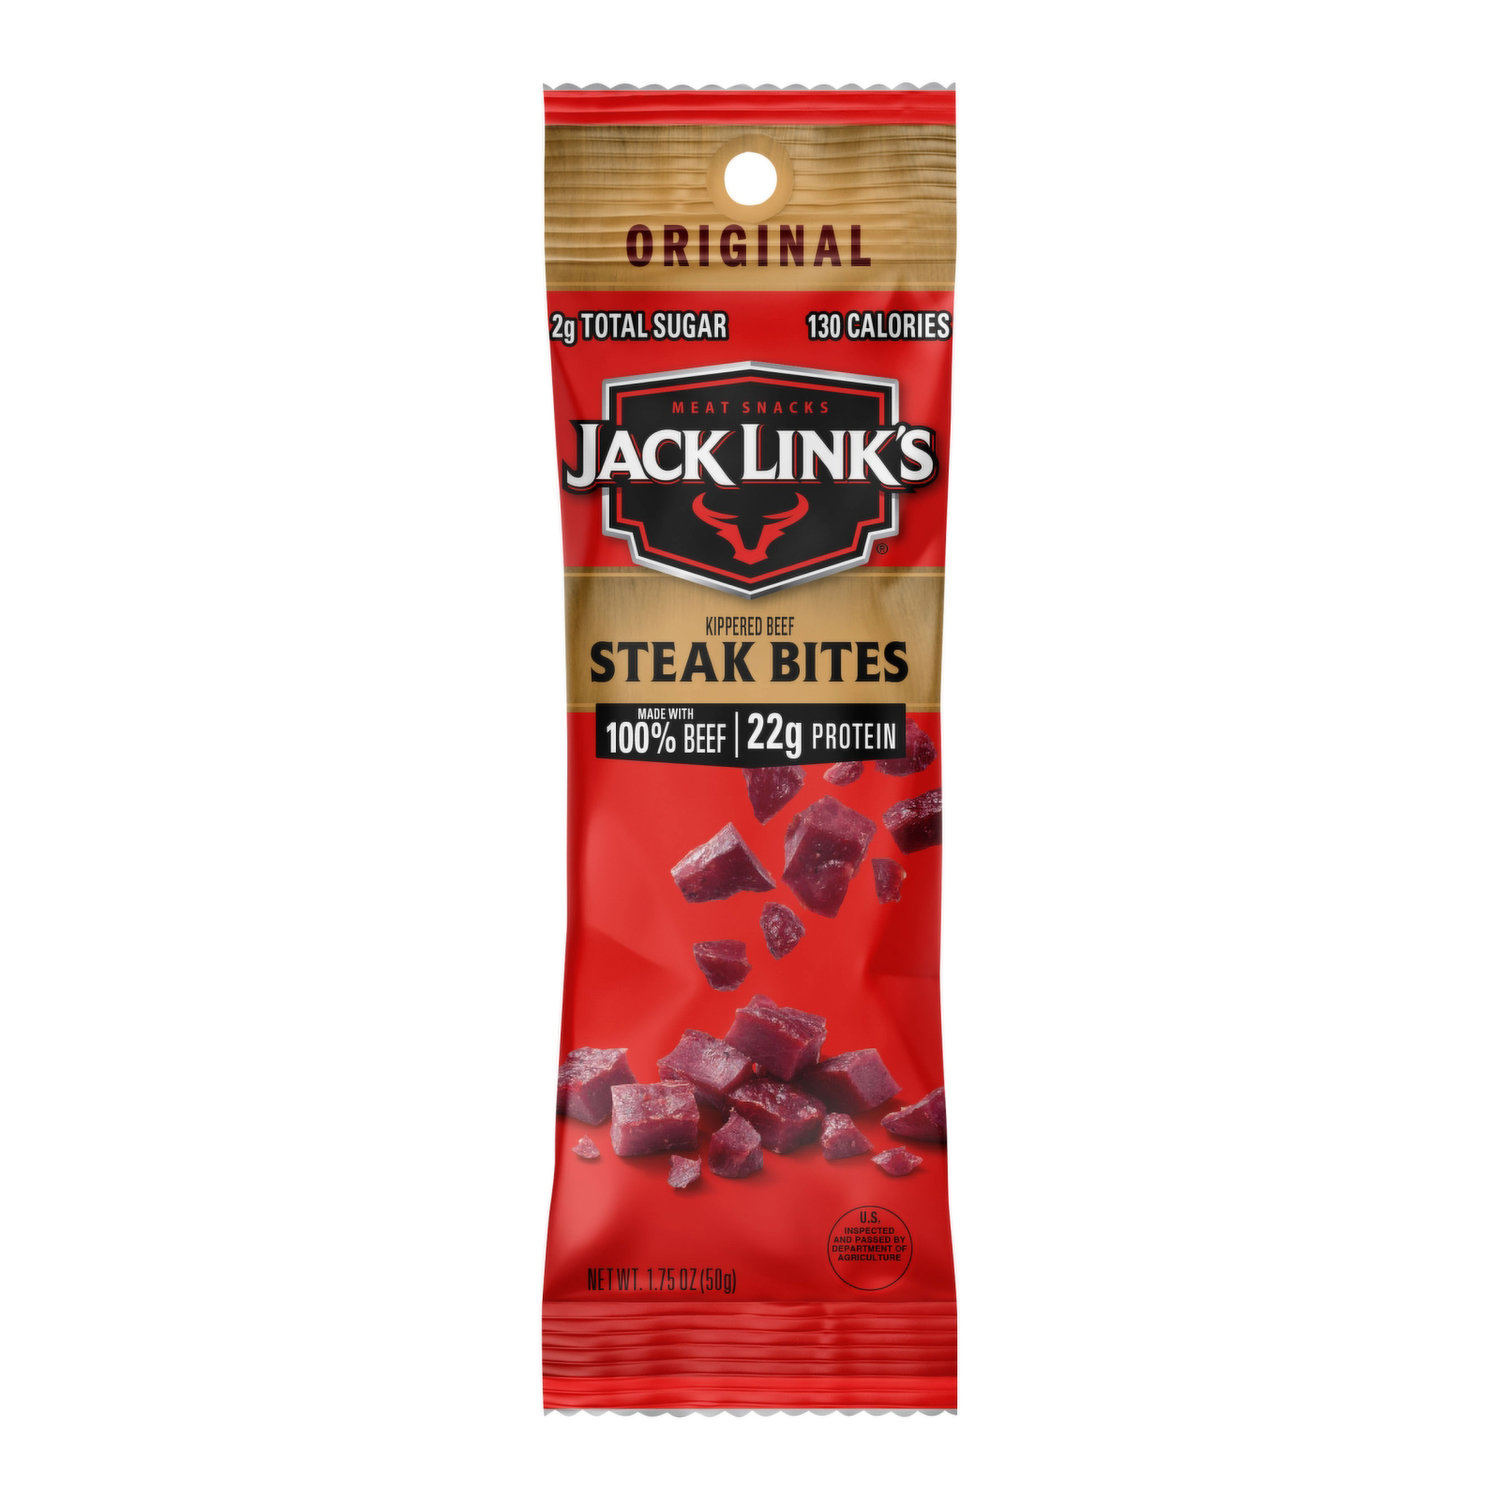 Jack Link's Premium Cuts A-1 Steak Sauce Beef Jerky 3.25 Ounce Resealable  Bag